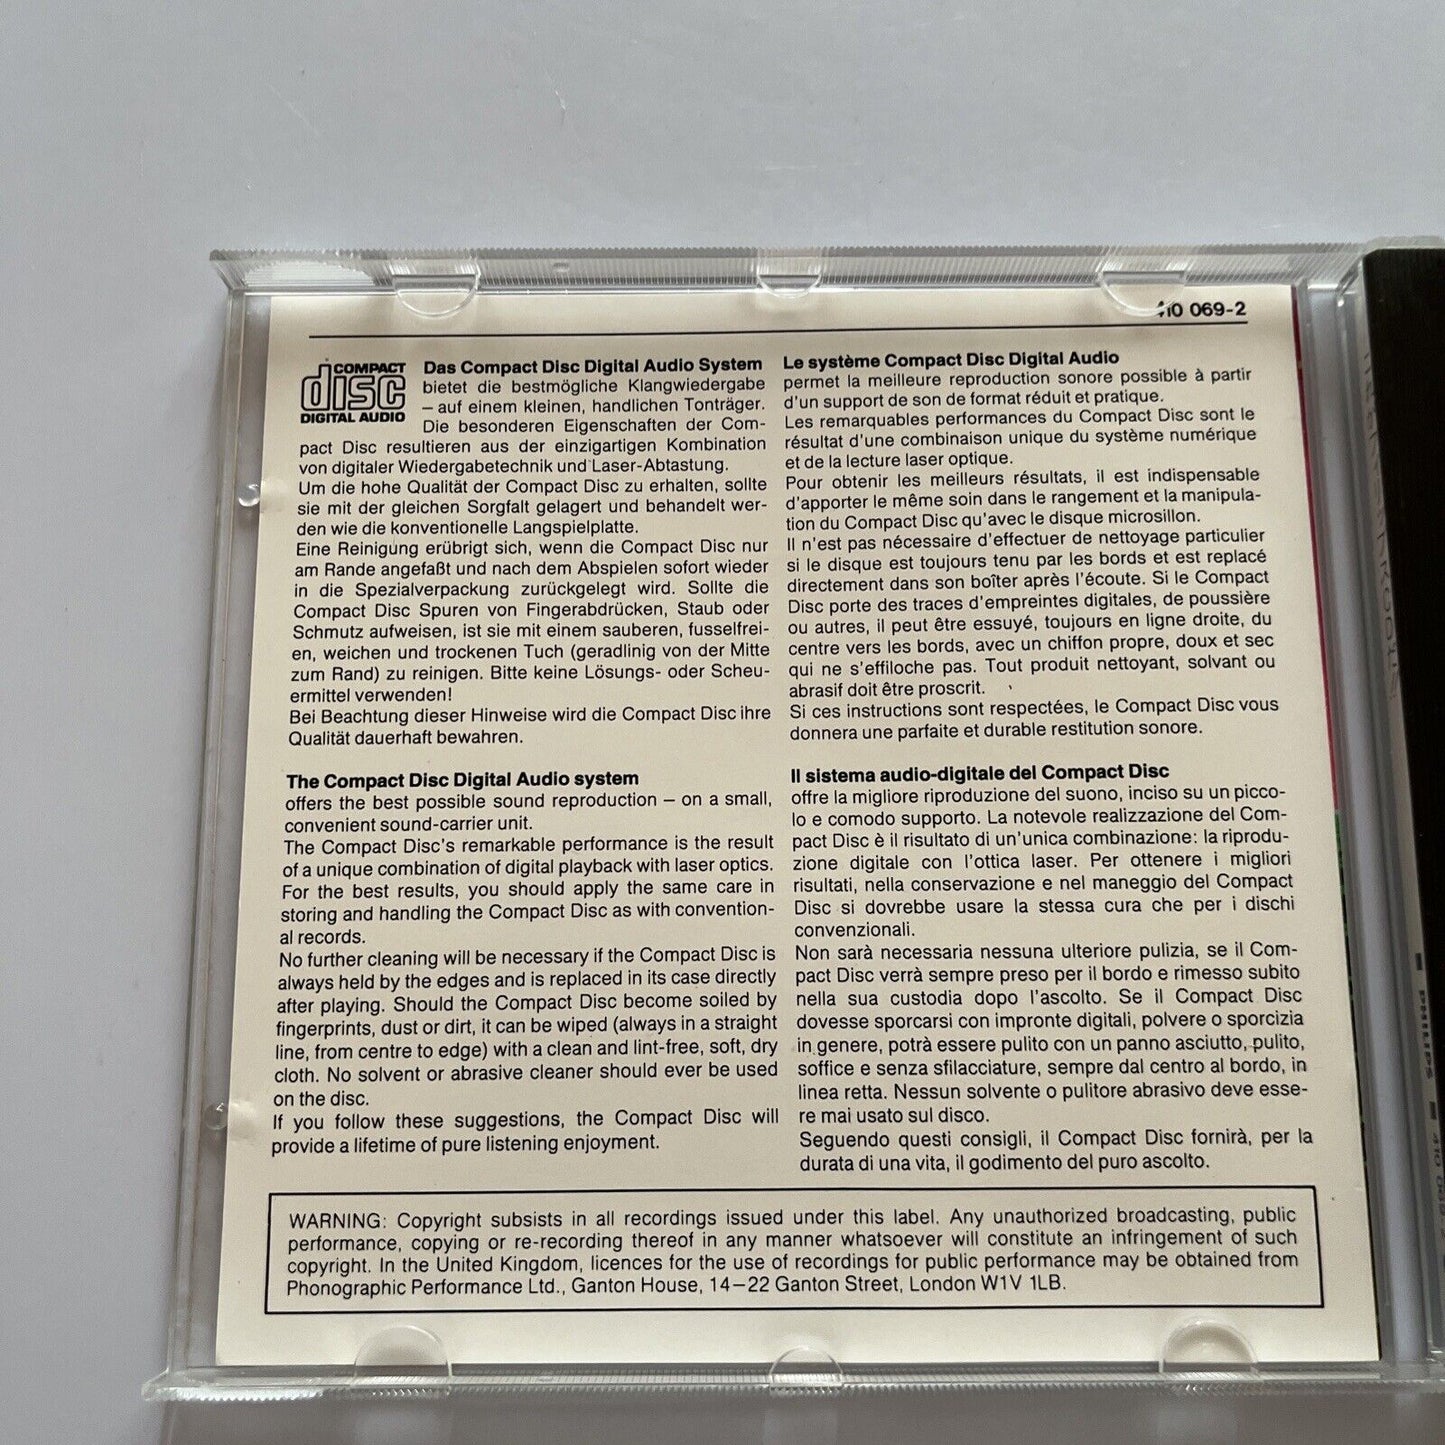 Philips - Digital Sound Spectacular (CD, 1982) 410 069-2